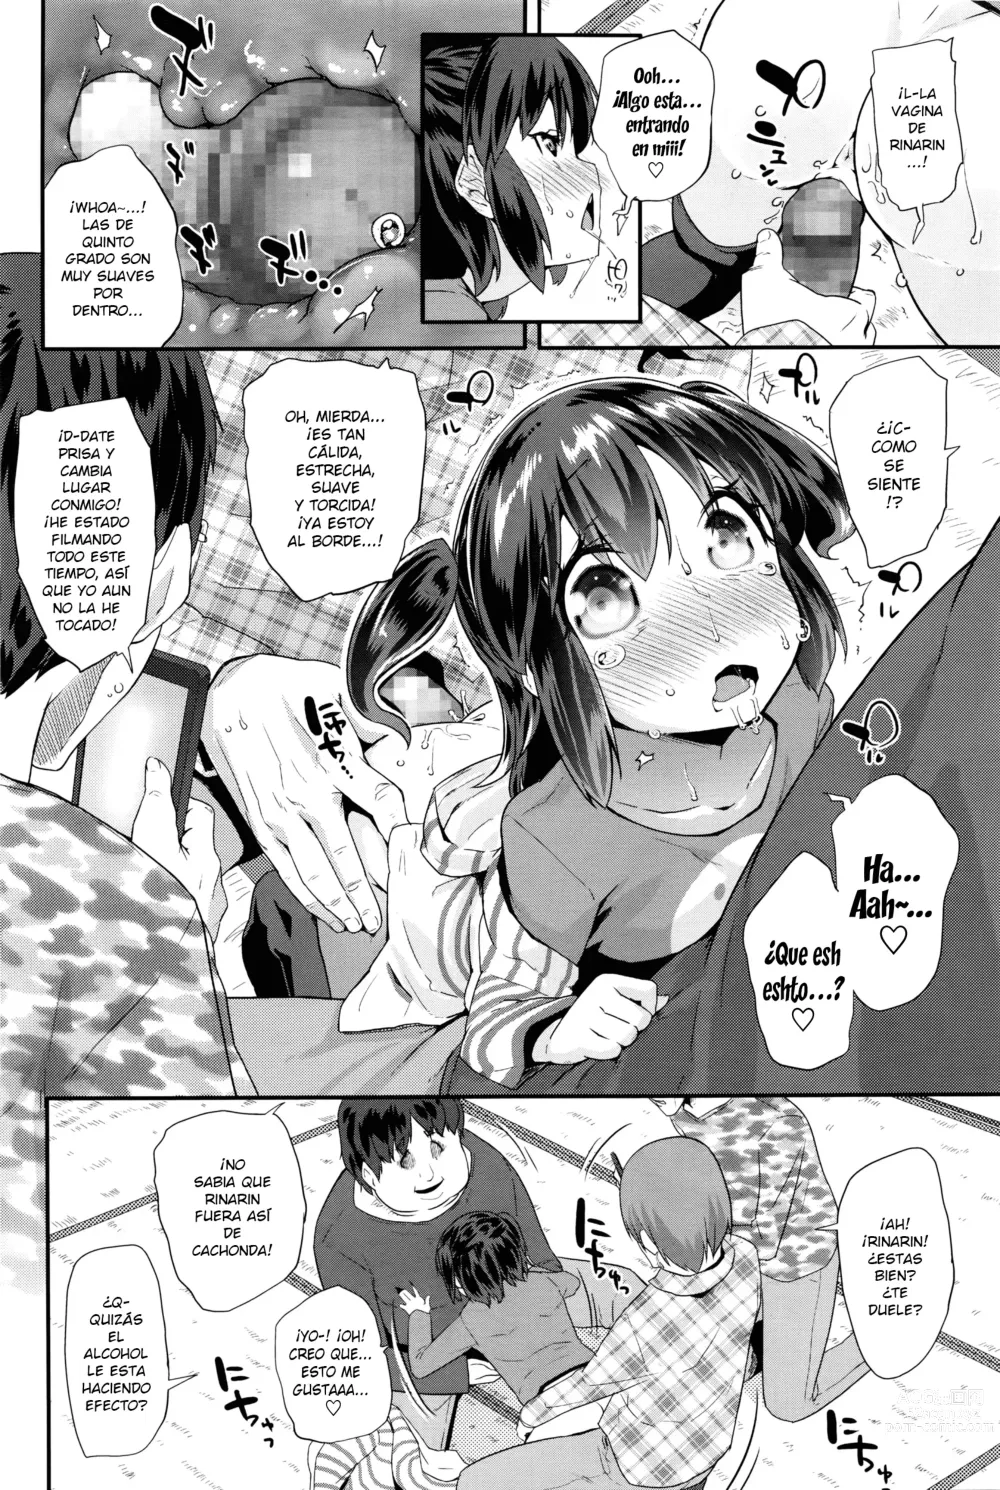 Page 6 of doujinshi Pako Pako Rina Rin 1-4